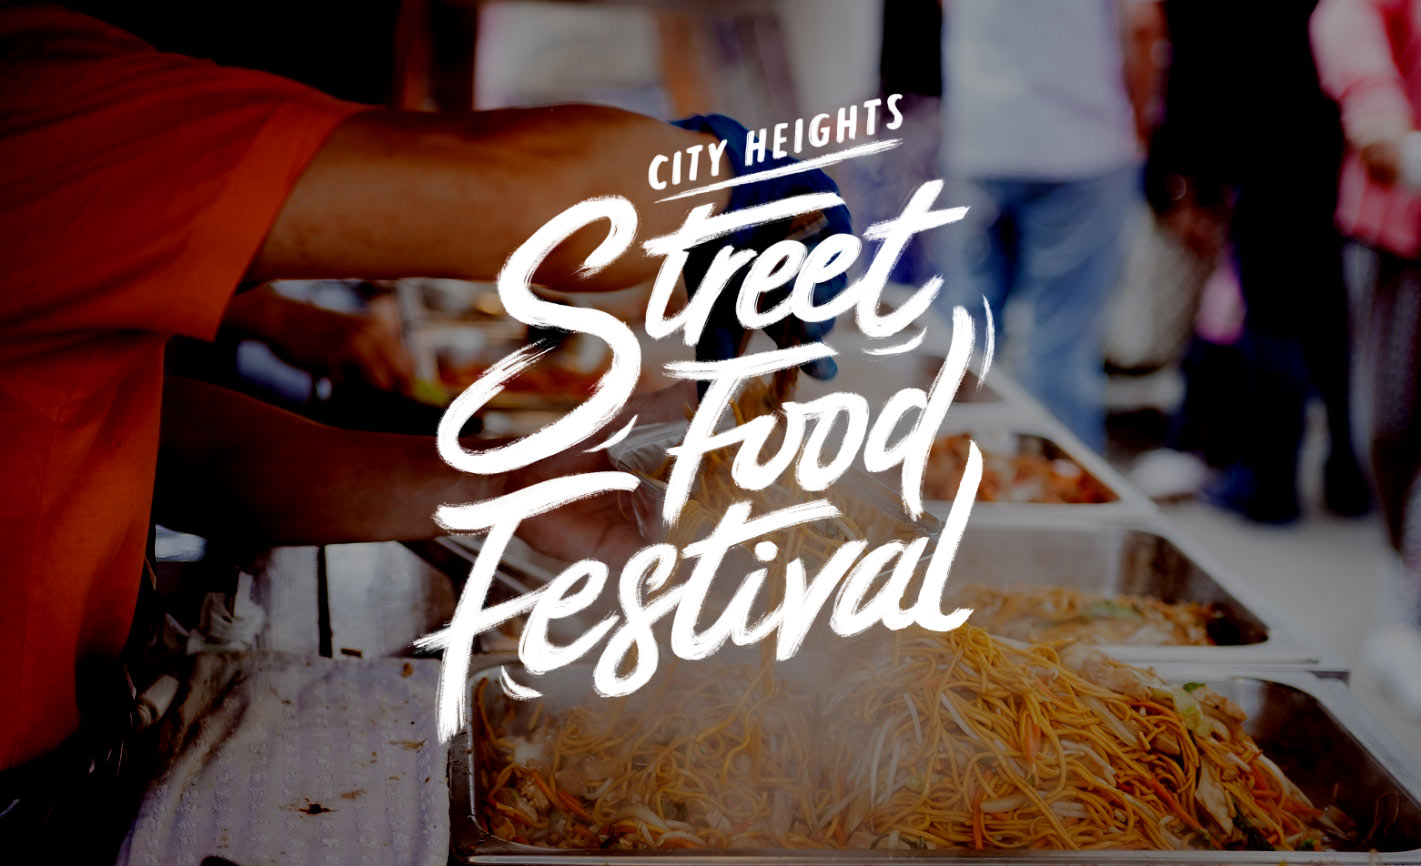 City Heights Street Food Festival